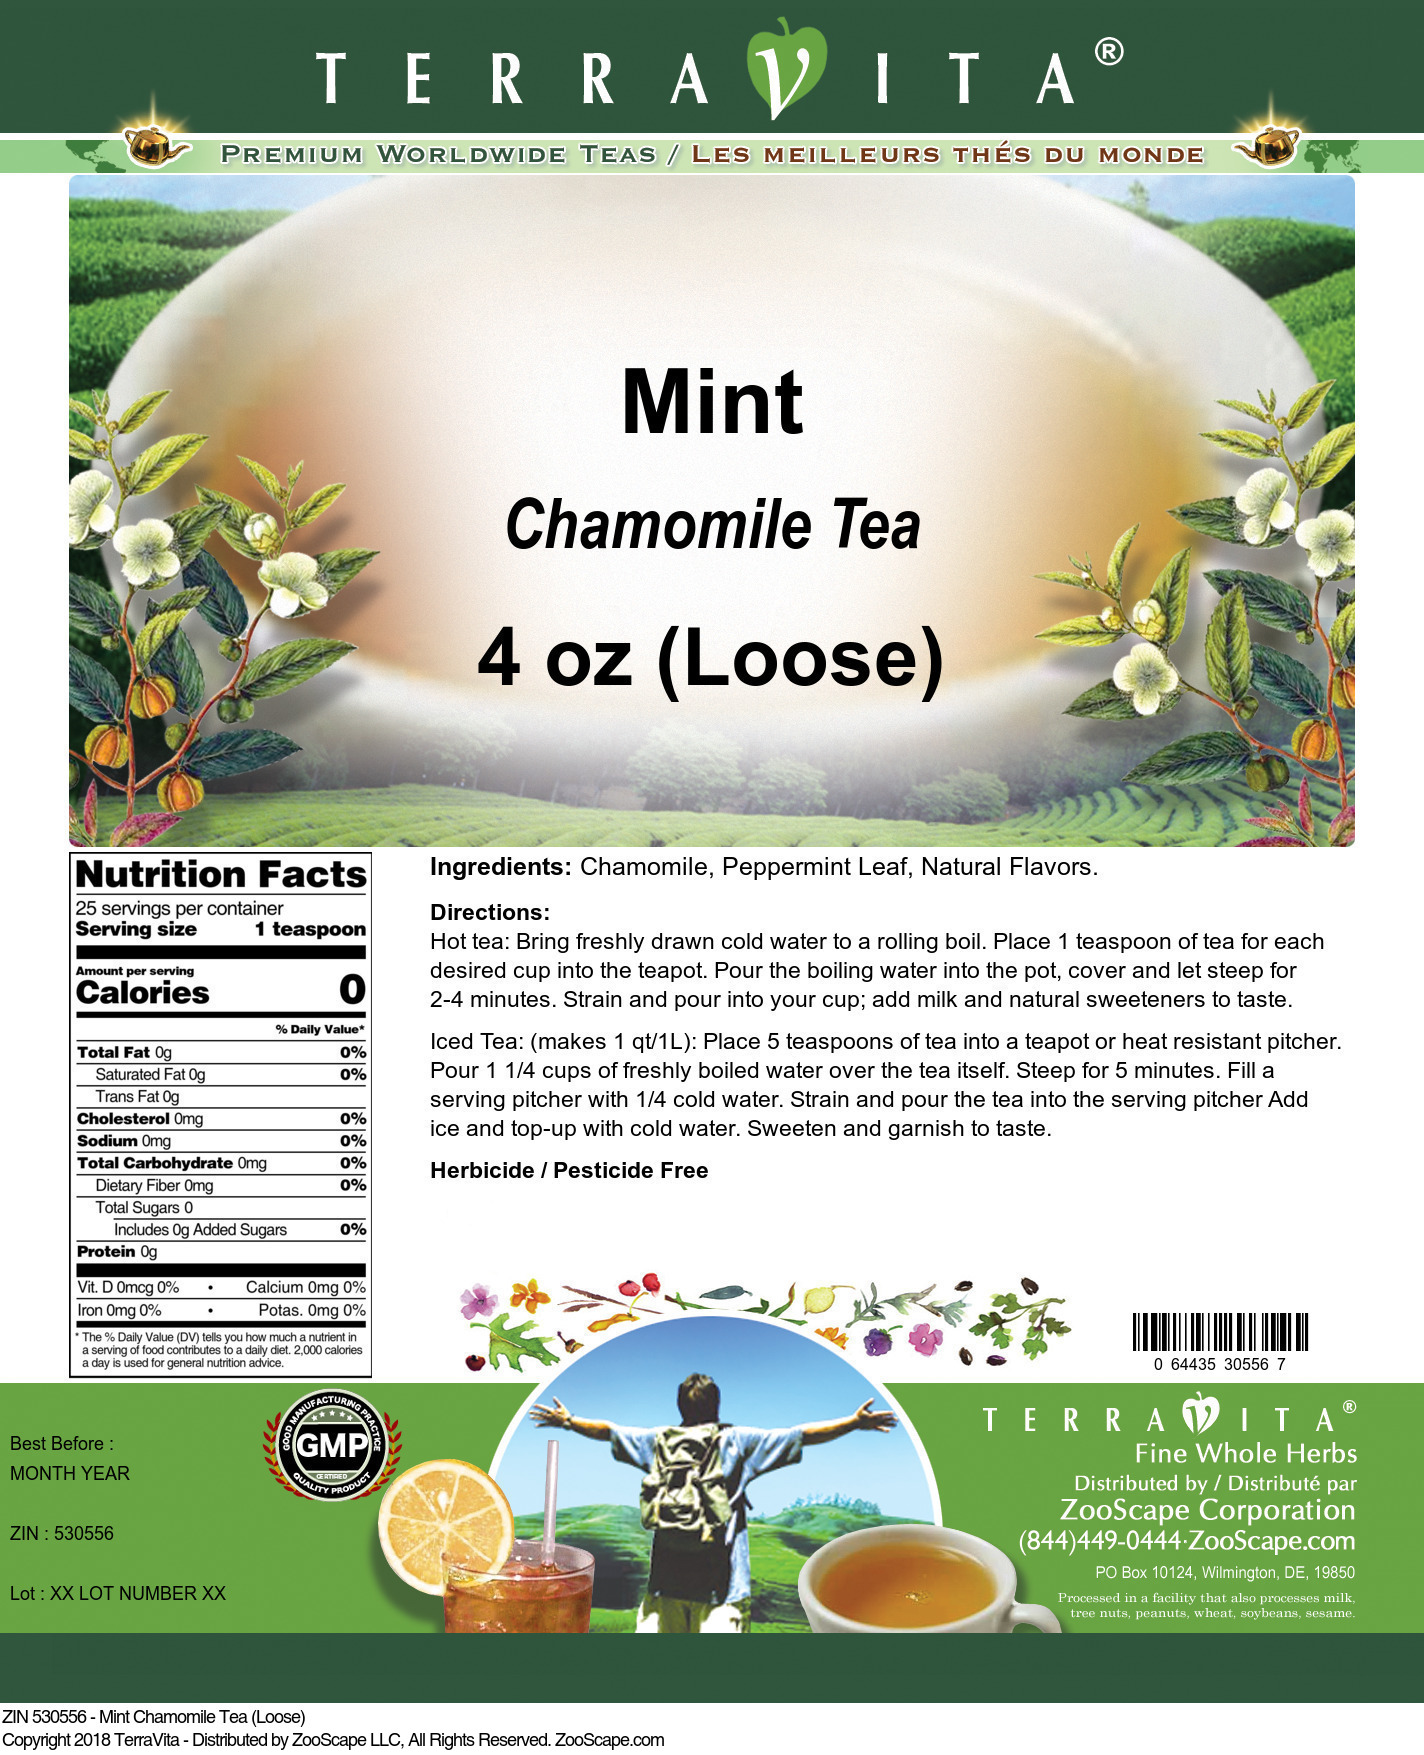 Mint Chamomile Tea (Loose) - Label